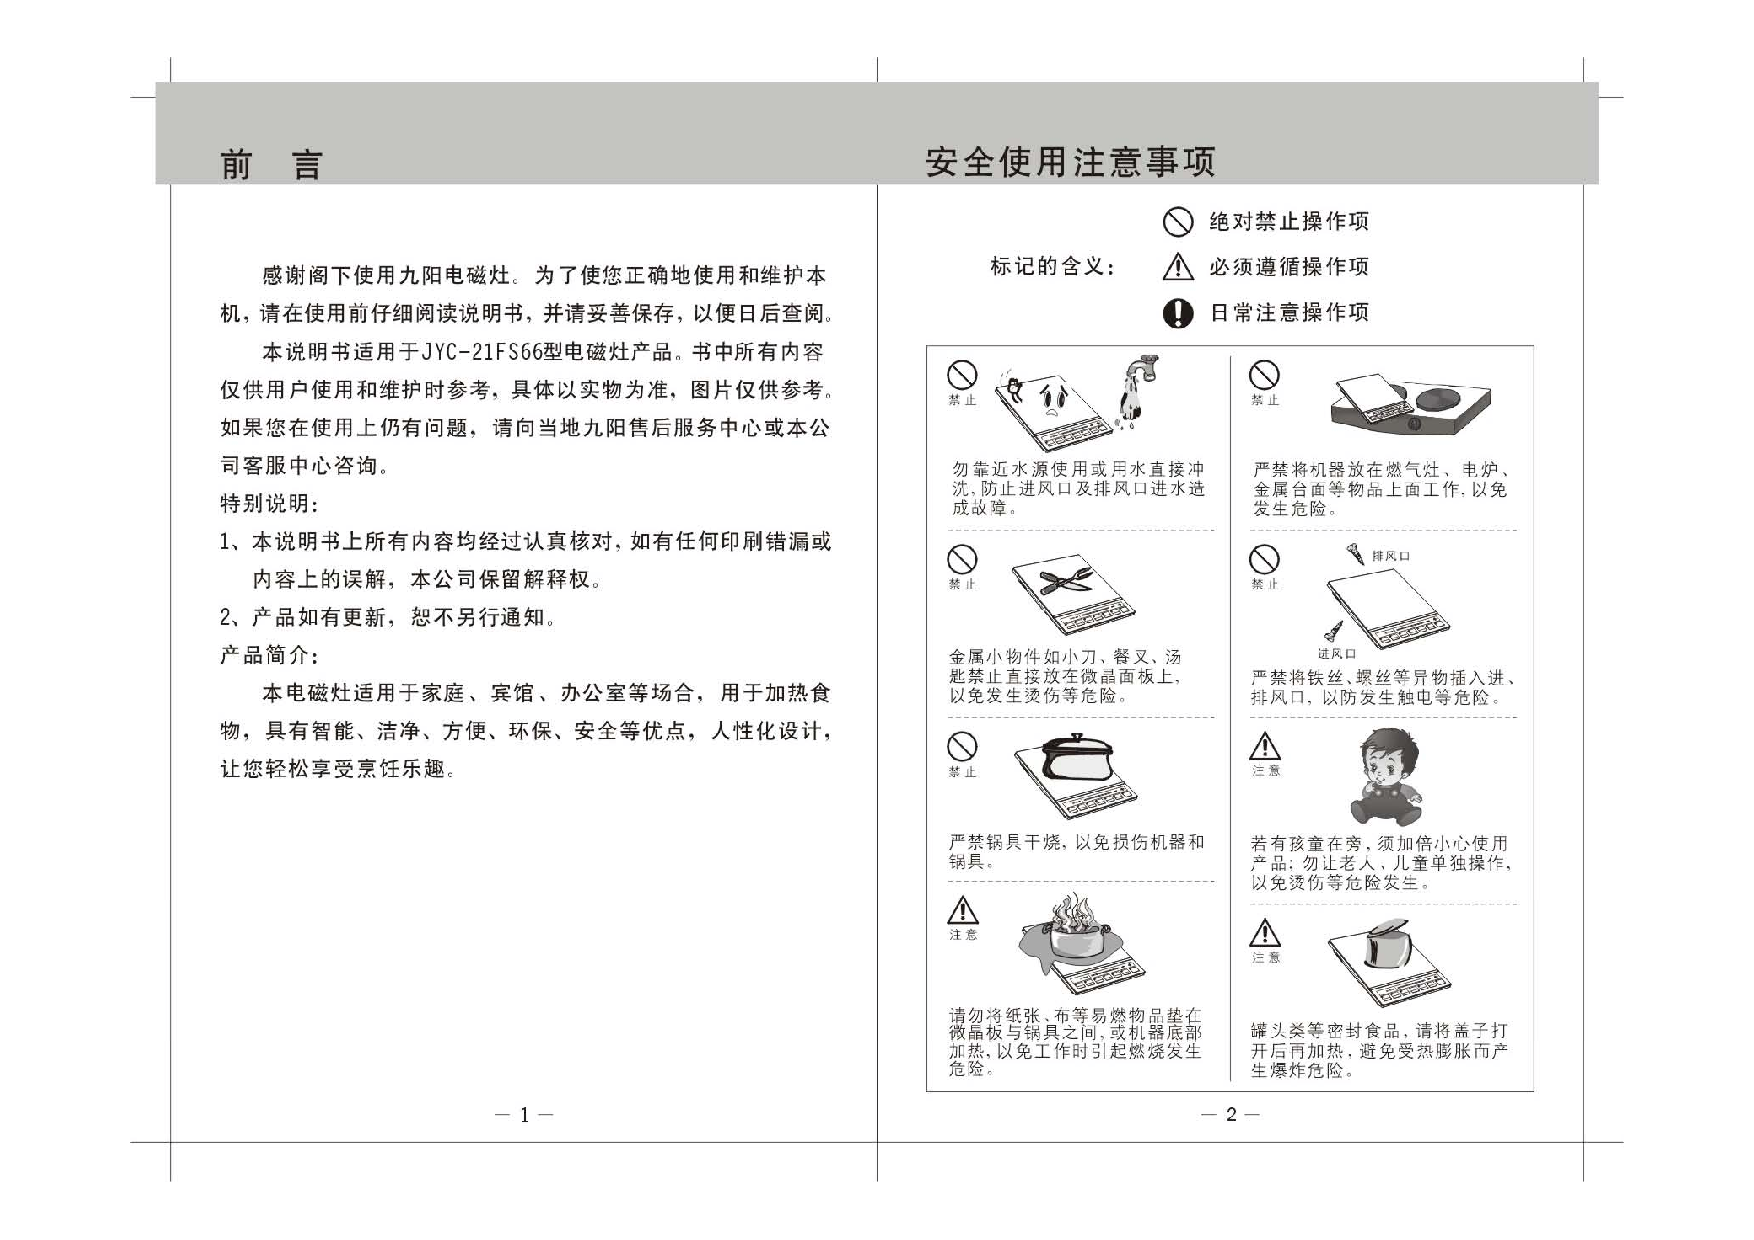 九阳 Joyyoung JYC-21FS66 使用说明书 第2页